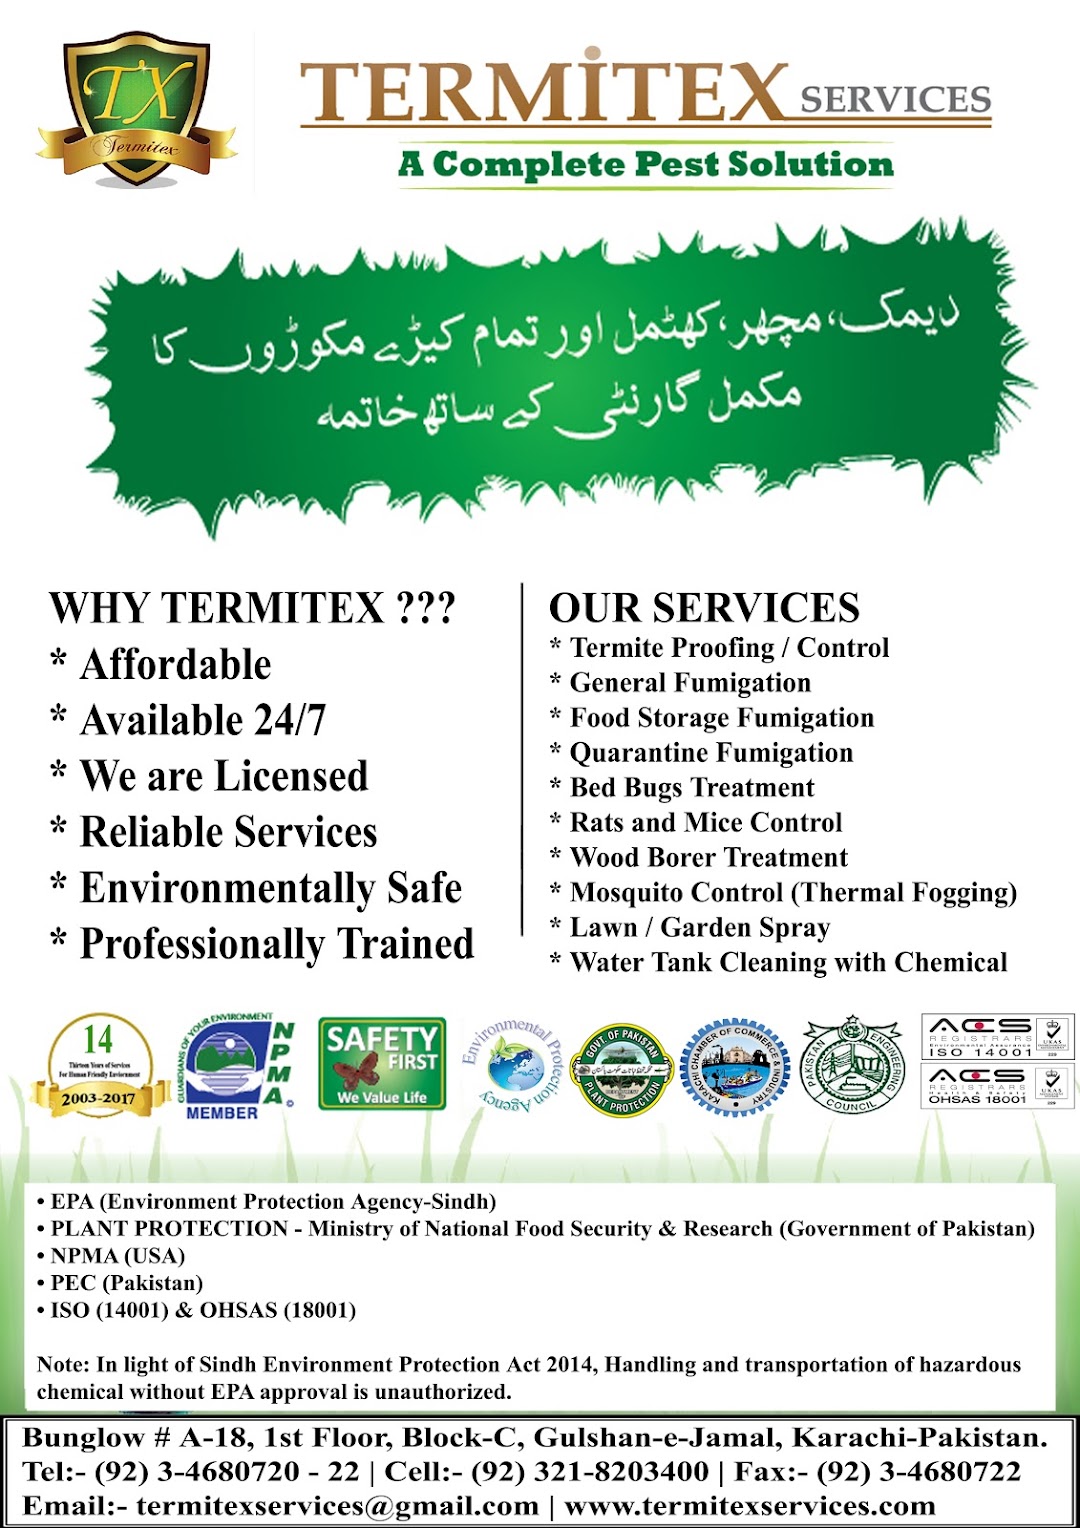 Termitex Services